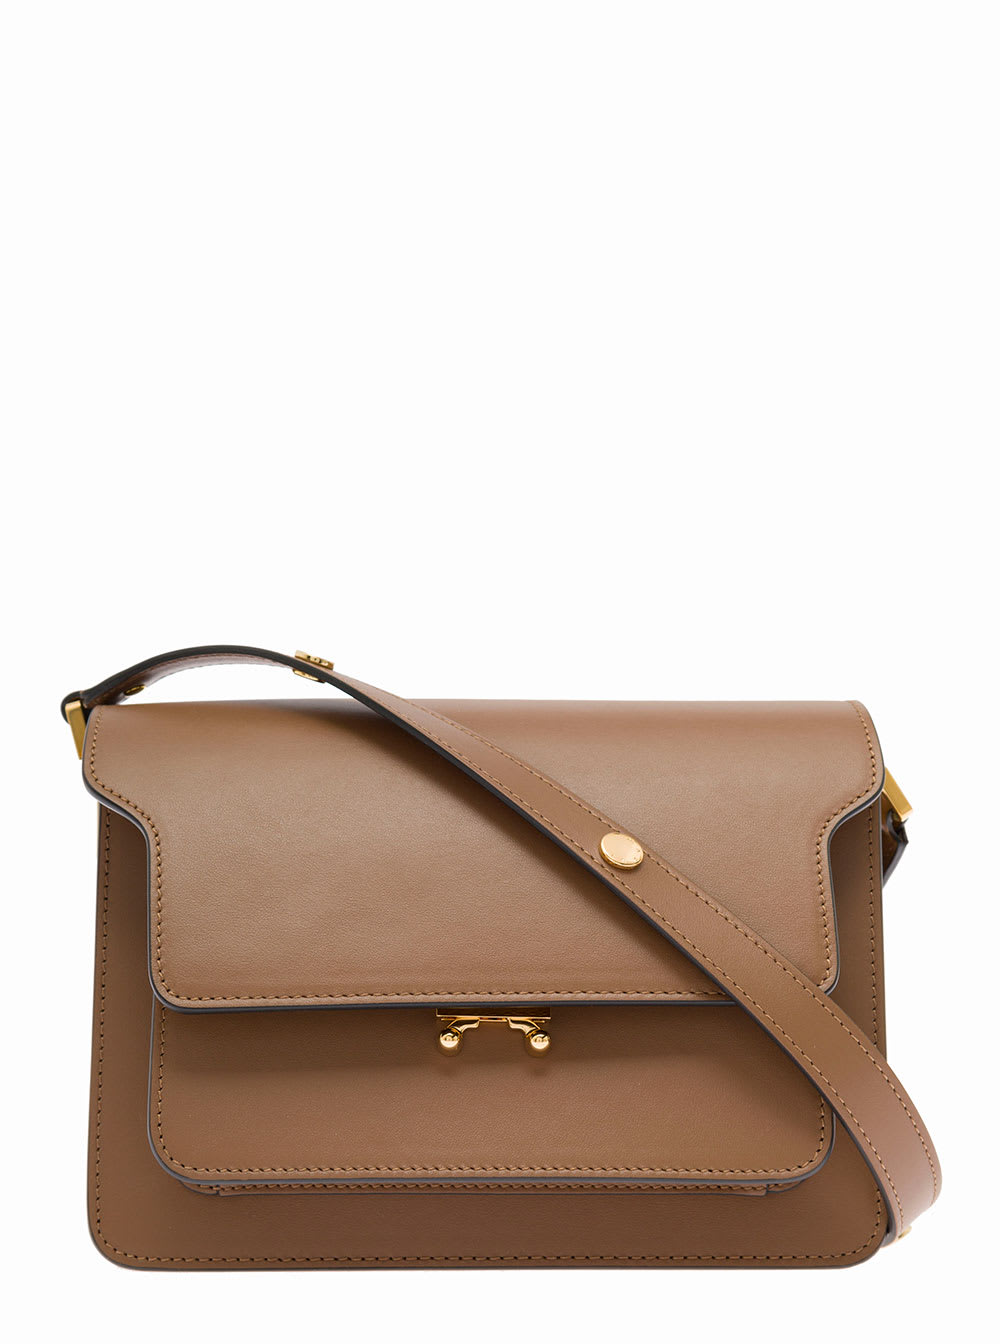 Marni Womans Brown Leather Crossbody Bag